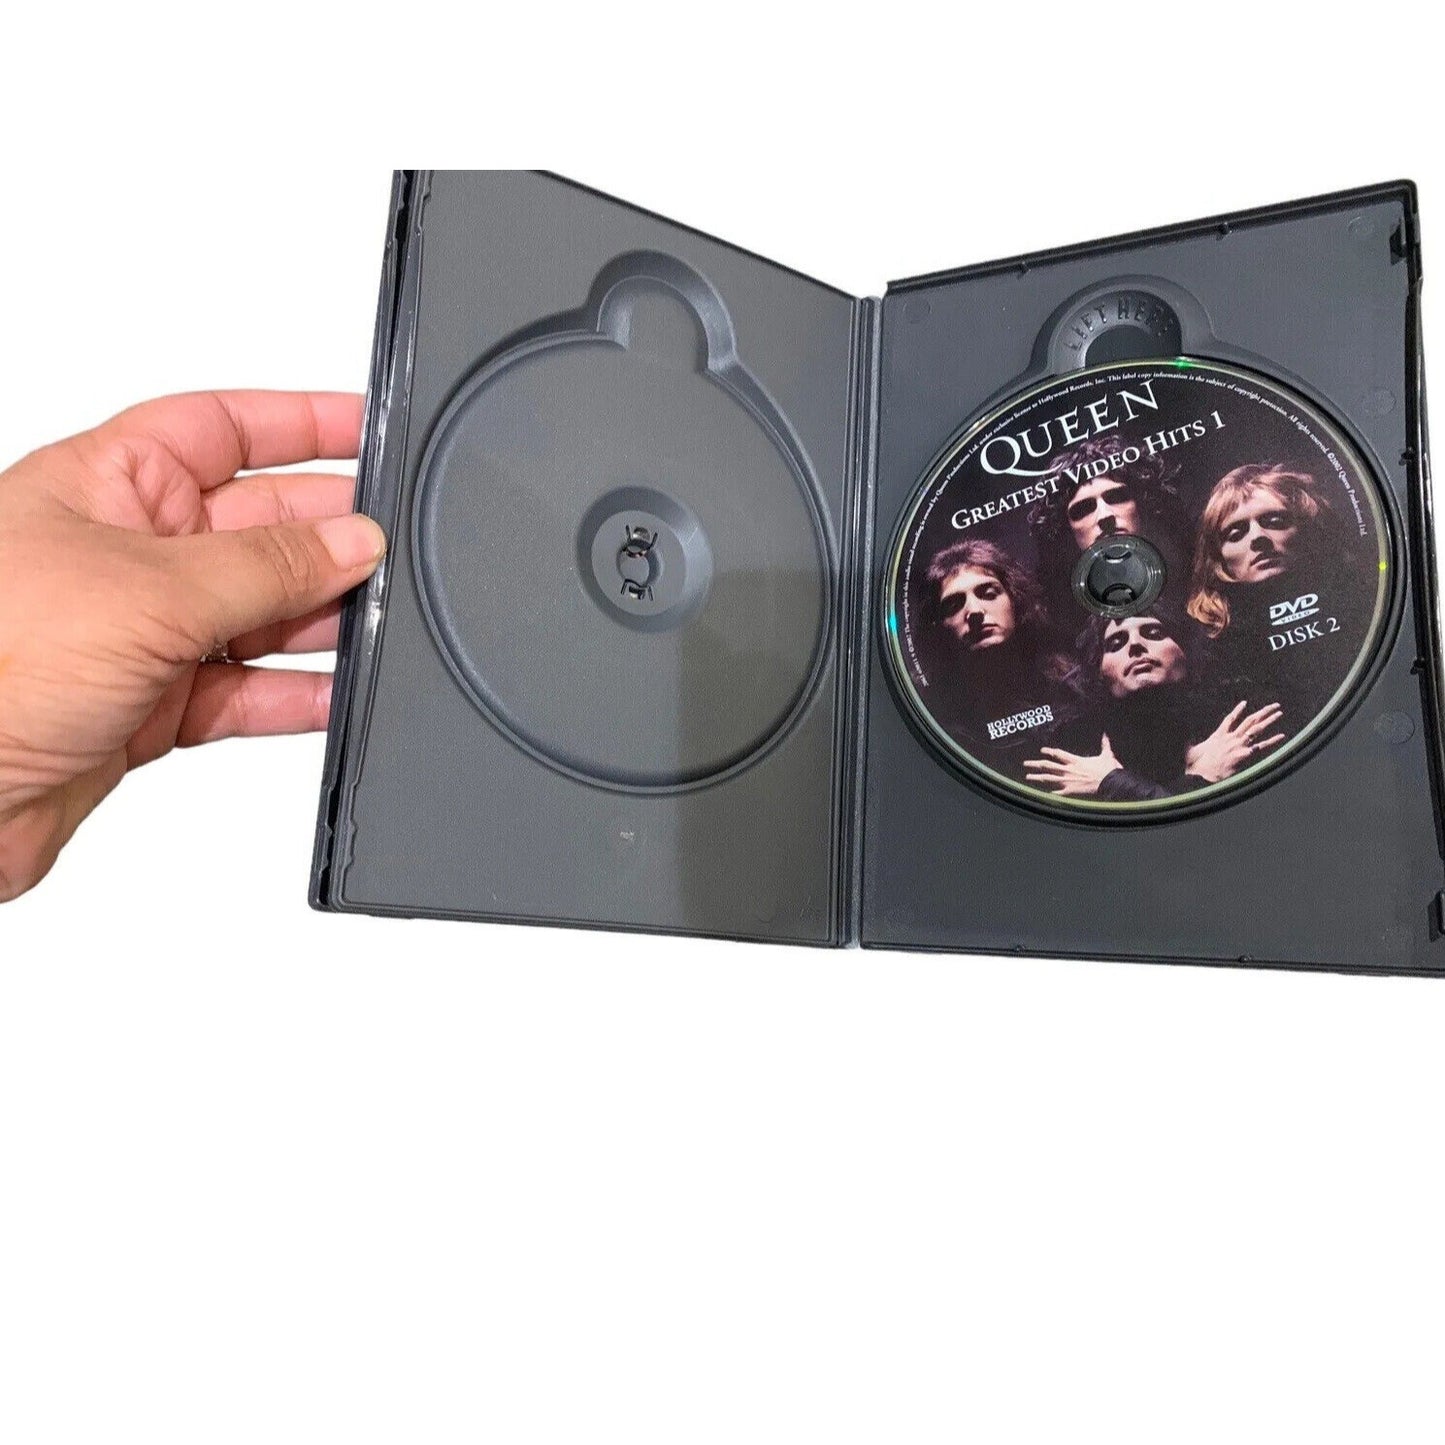 Queen Greatest Video Hits 1 (DVD, 2002, 2-Disc Set)